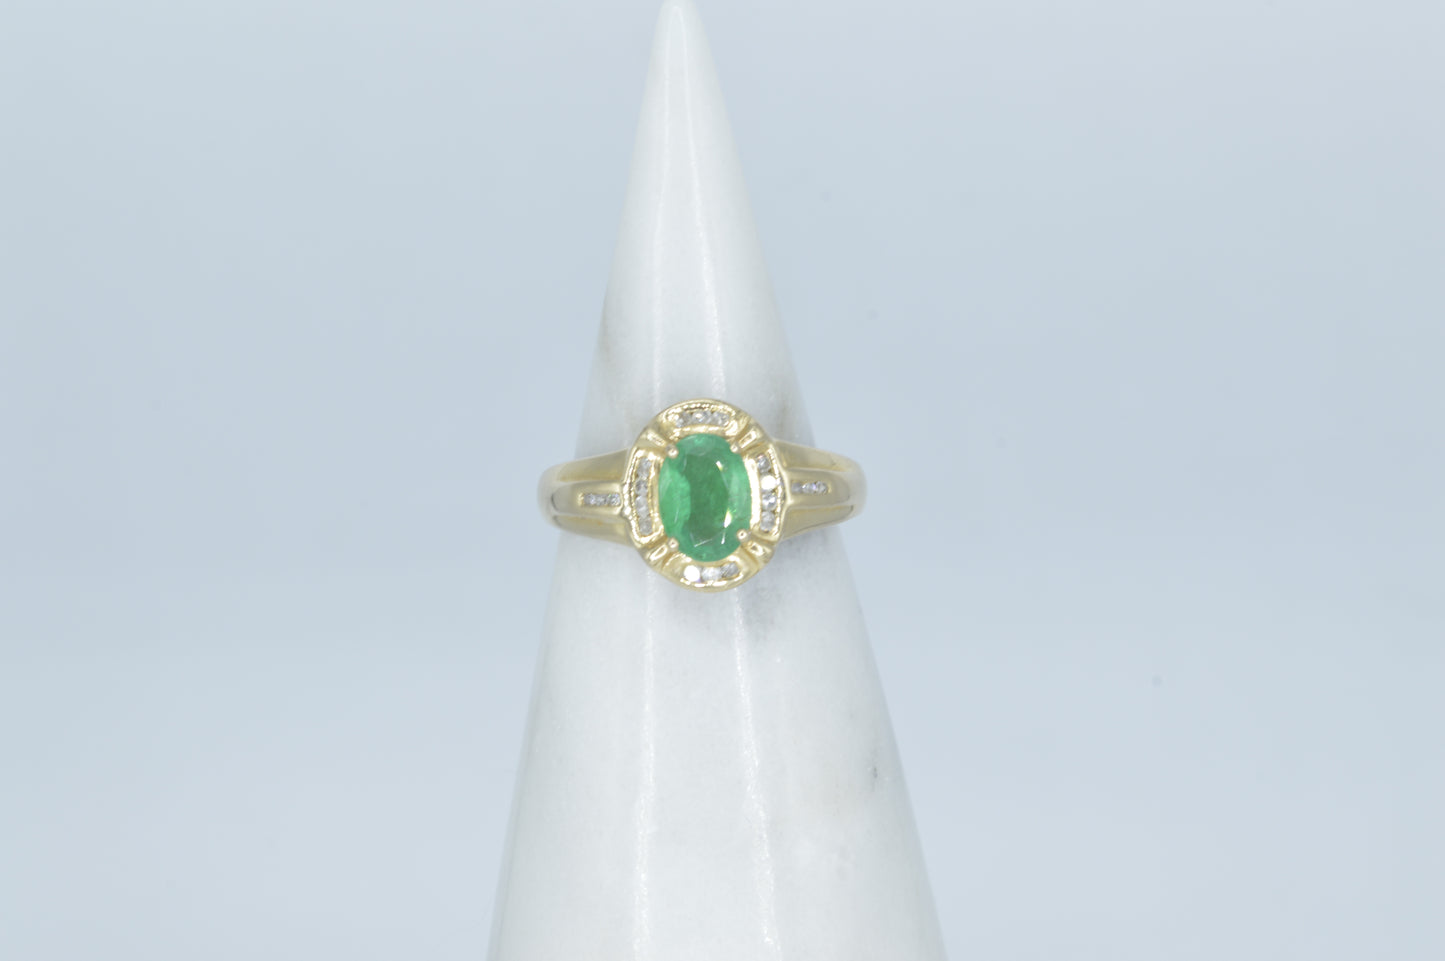 Haloed Emerald Ring